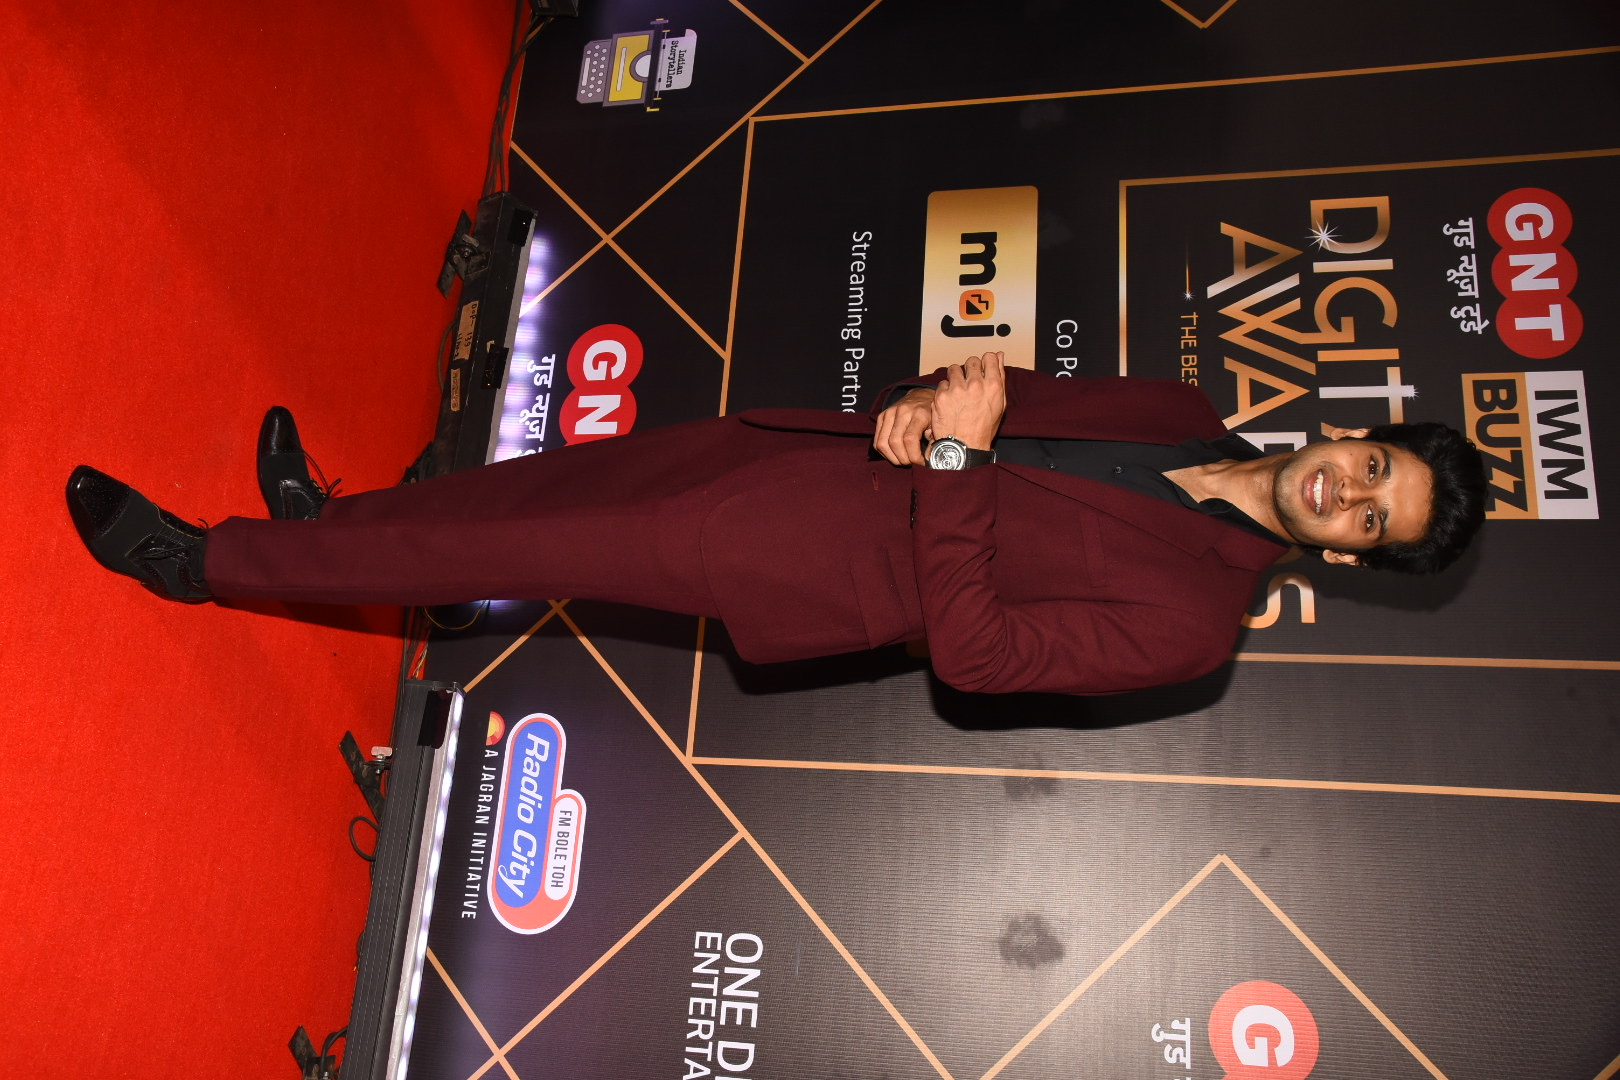 Abhimanyu Dassani looks smart in the burgundy suit